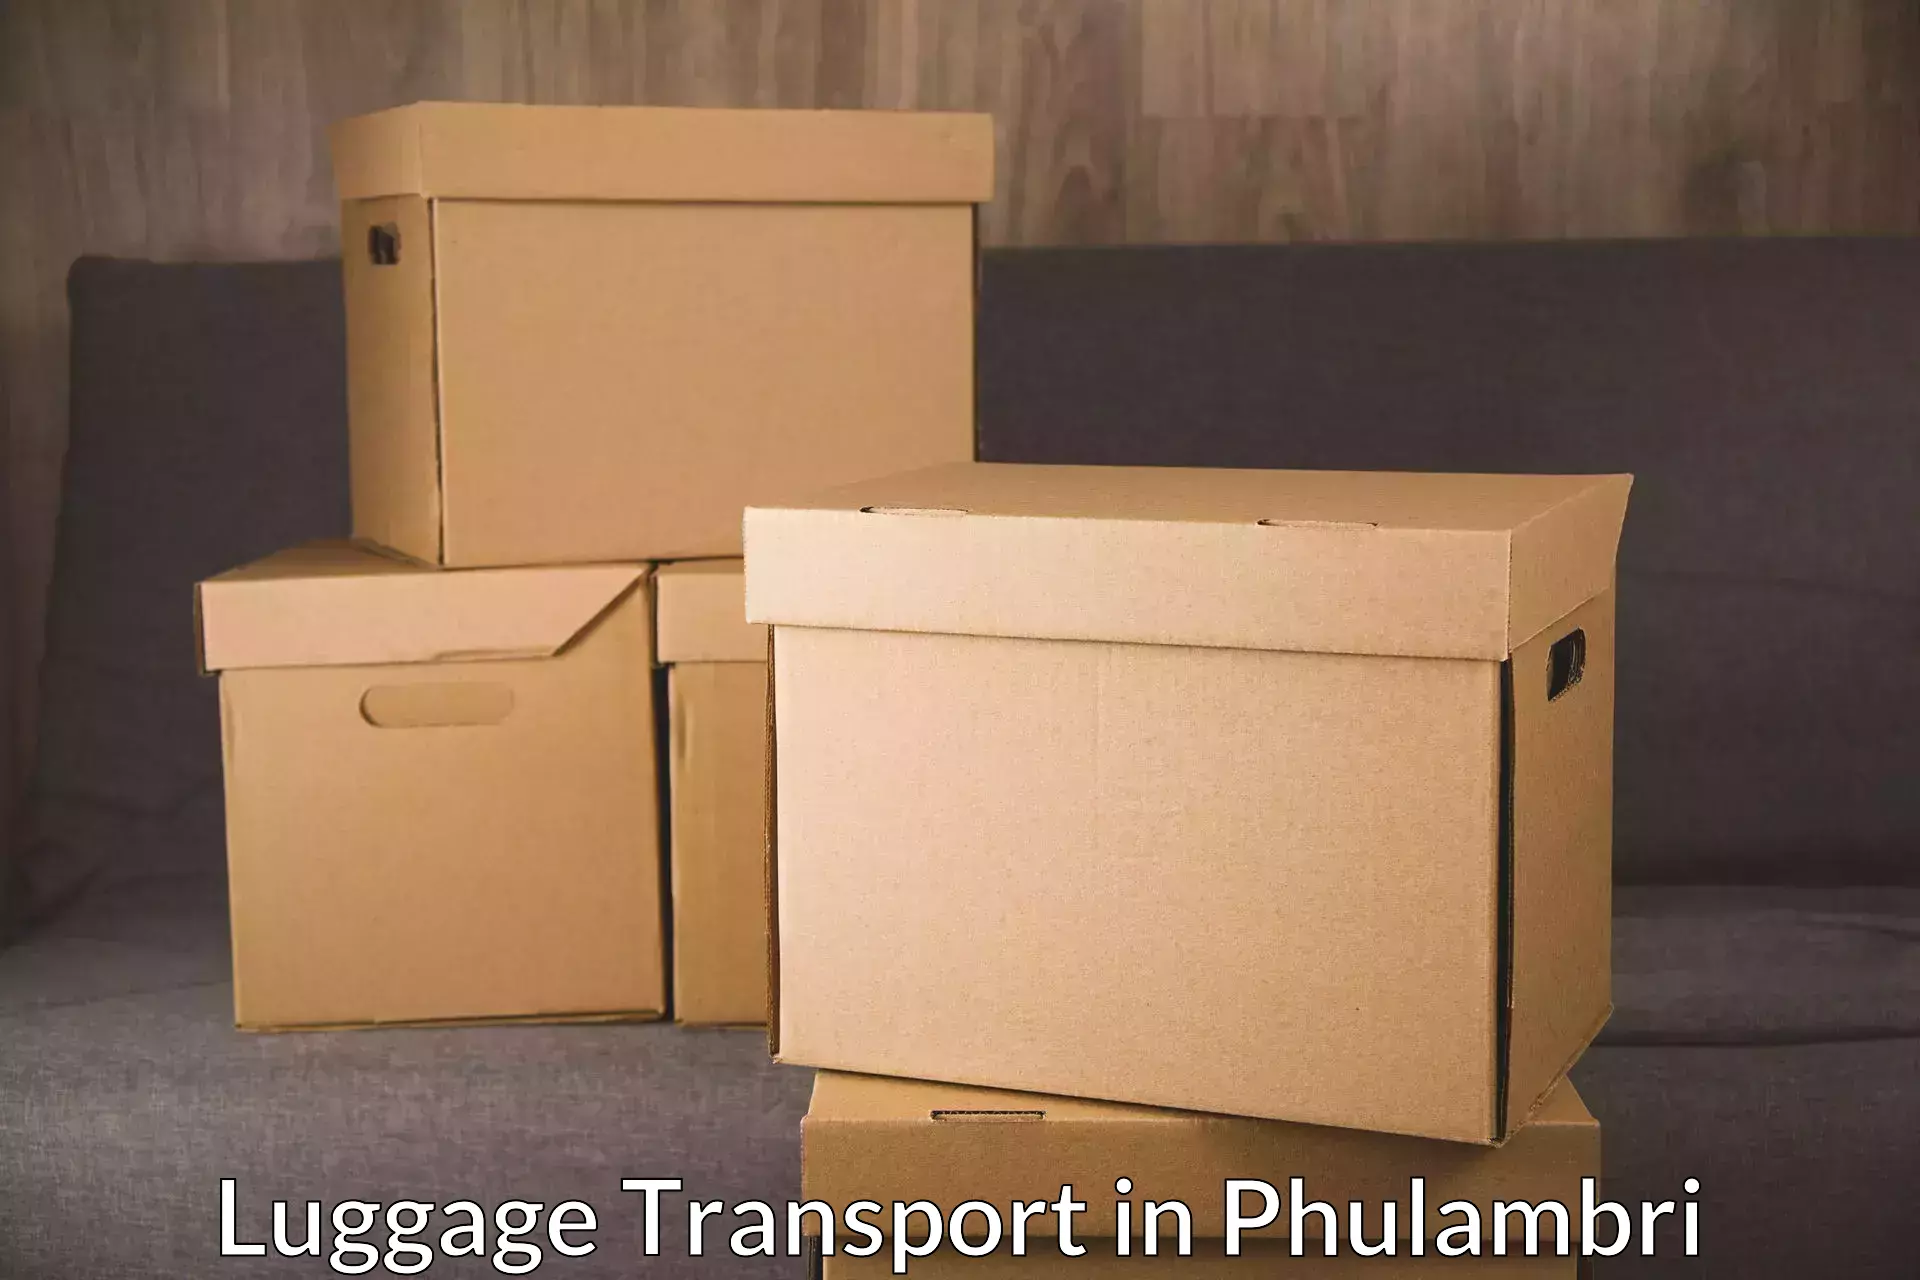 Business luggage transport in Phulambri